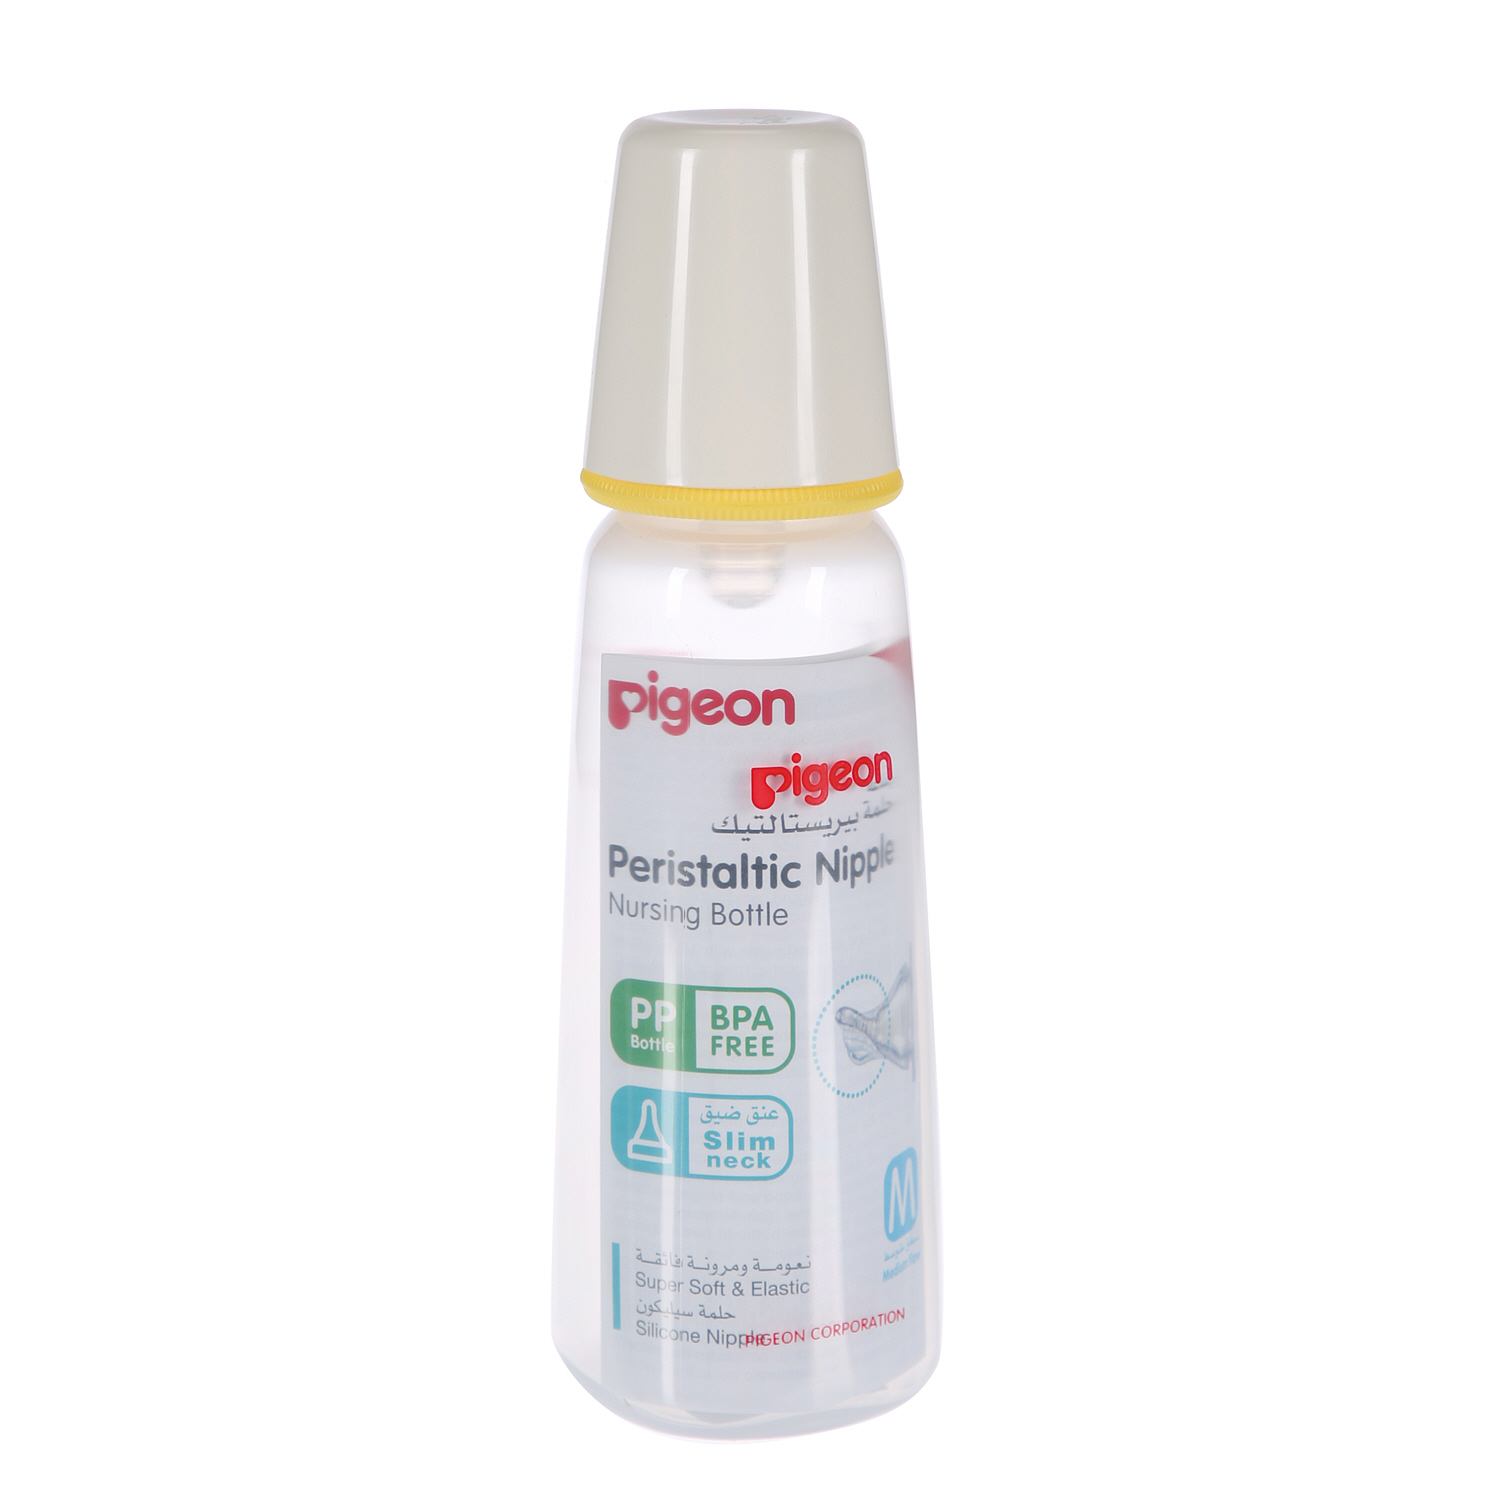 Pigeon KPP Standard Neck Nursing Bottle 240 ml